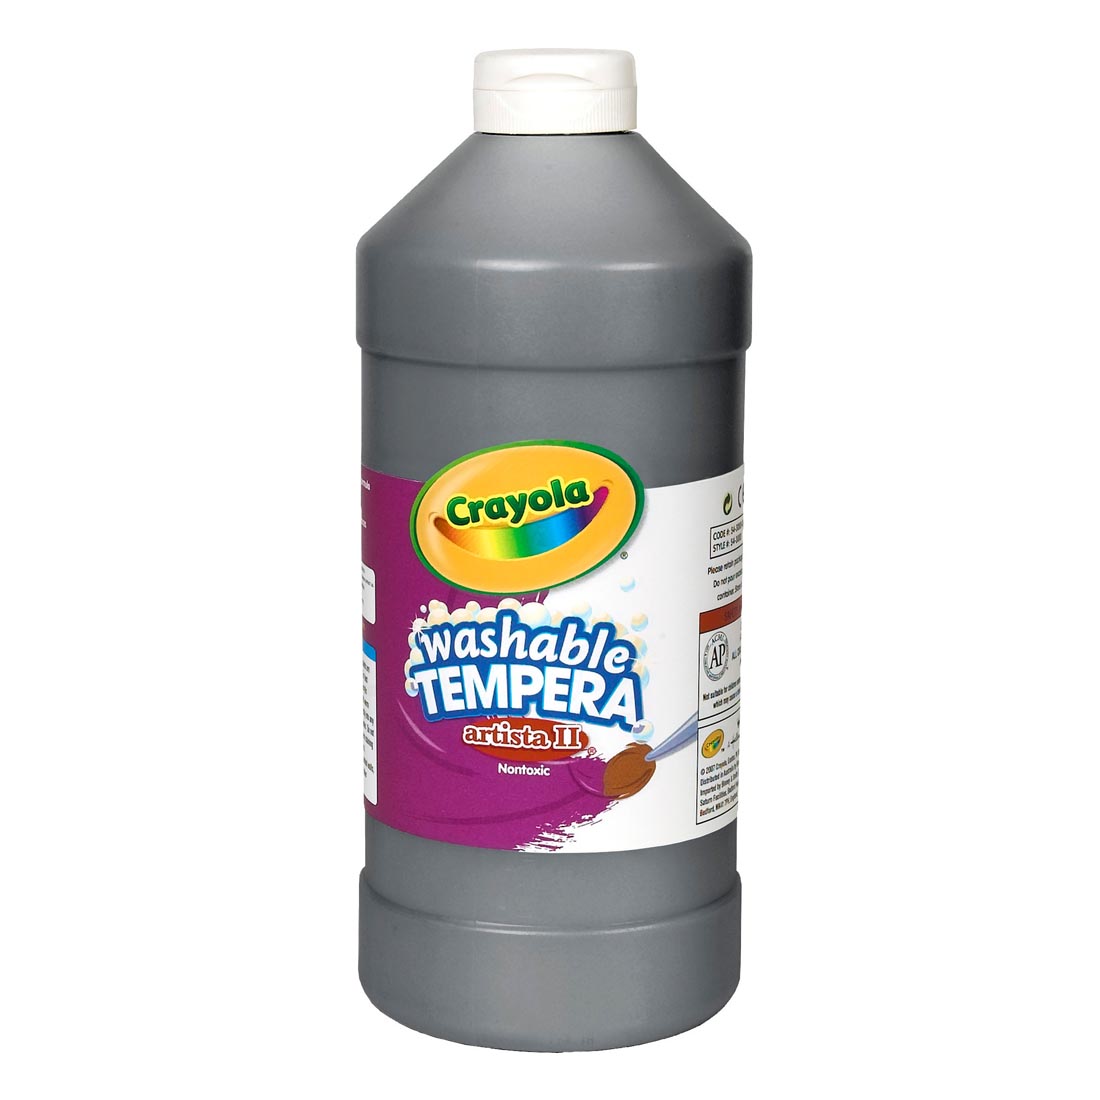 Bottle of Black Crayola Artista II Washable Tempera Paint